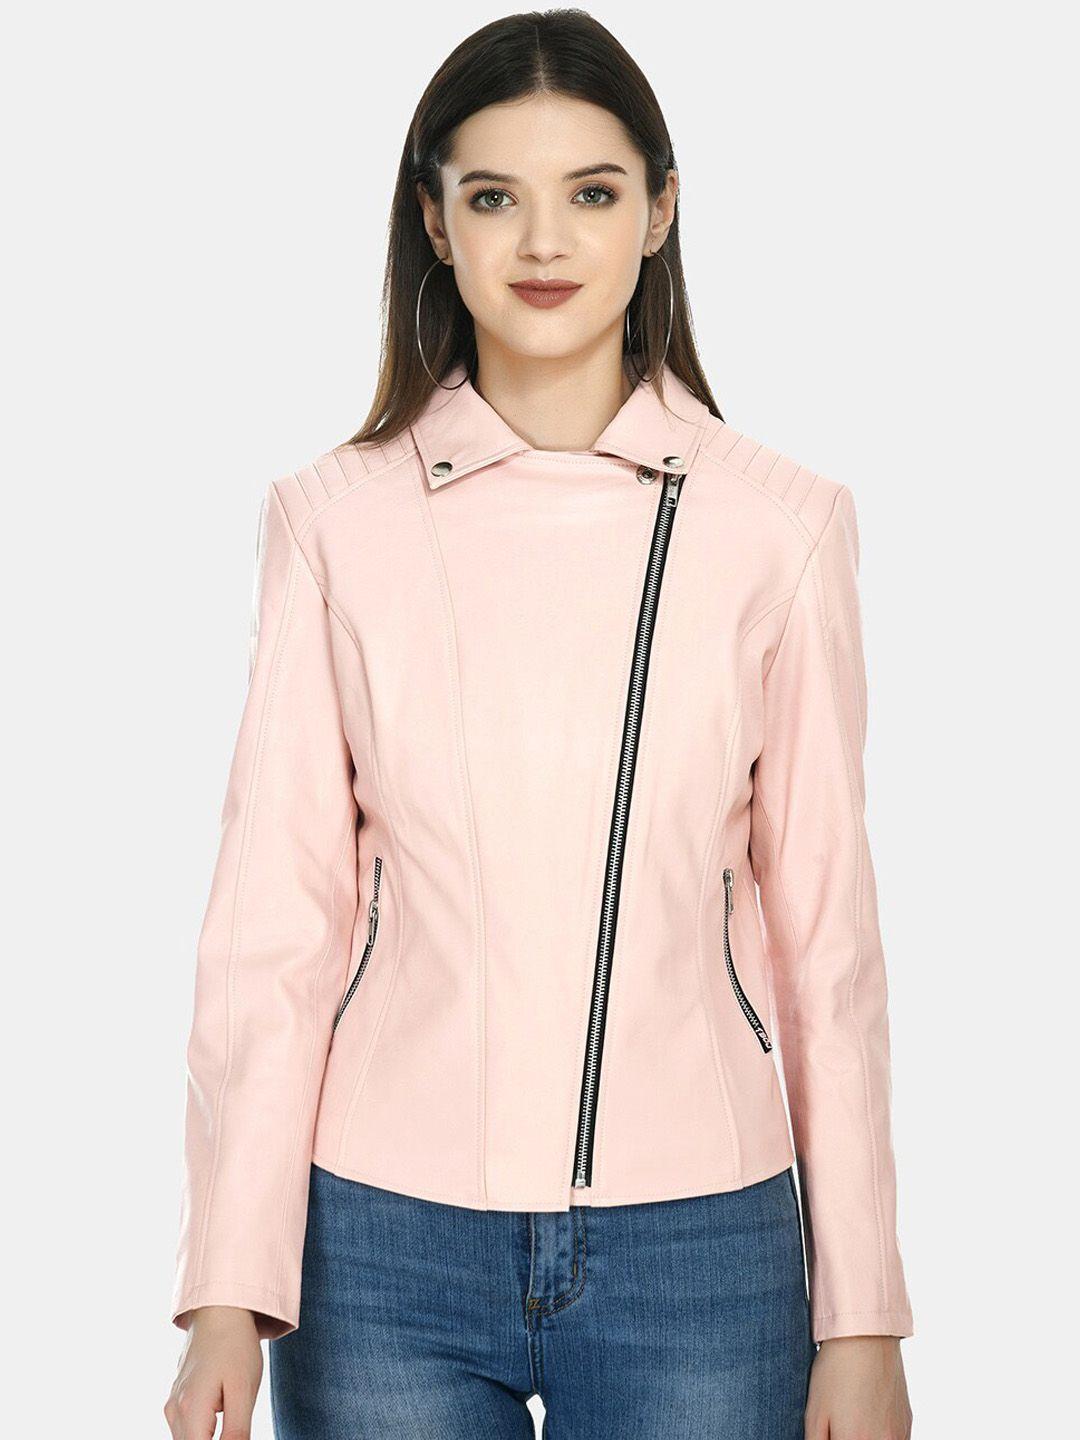 tboj-women-pink-leather-lightweight-open-front-jacket